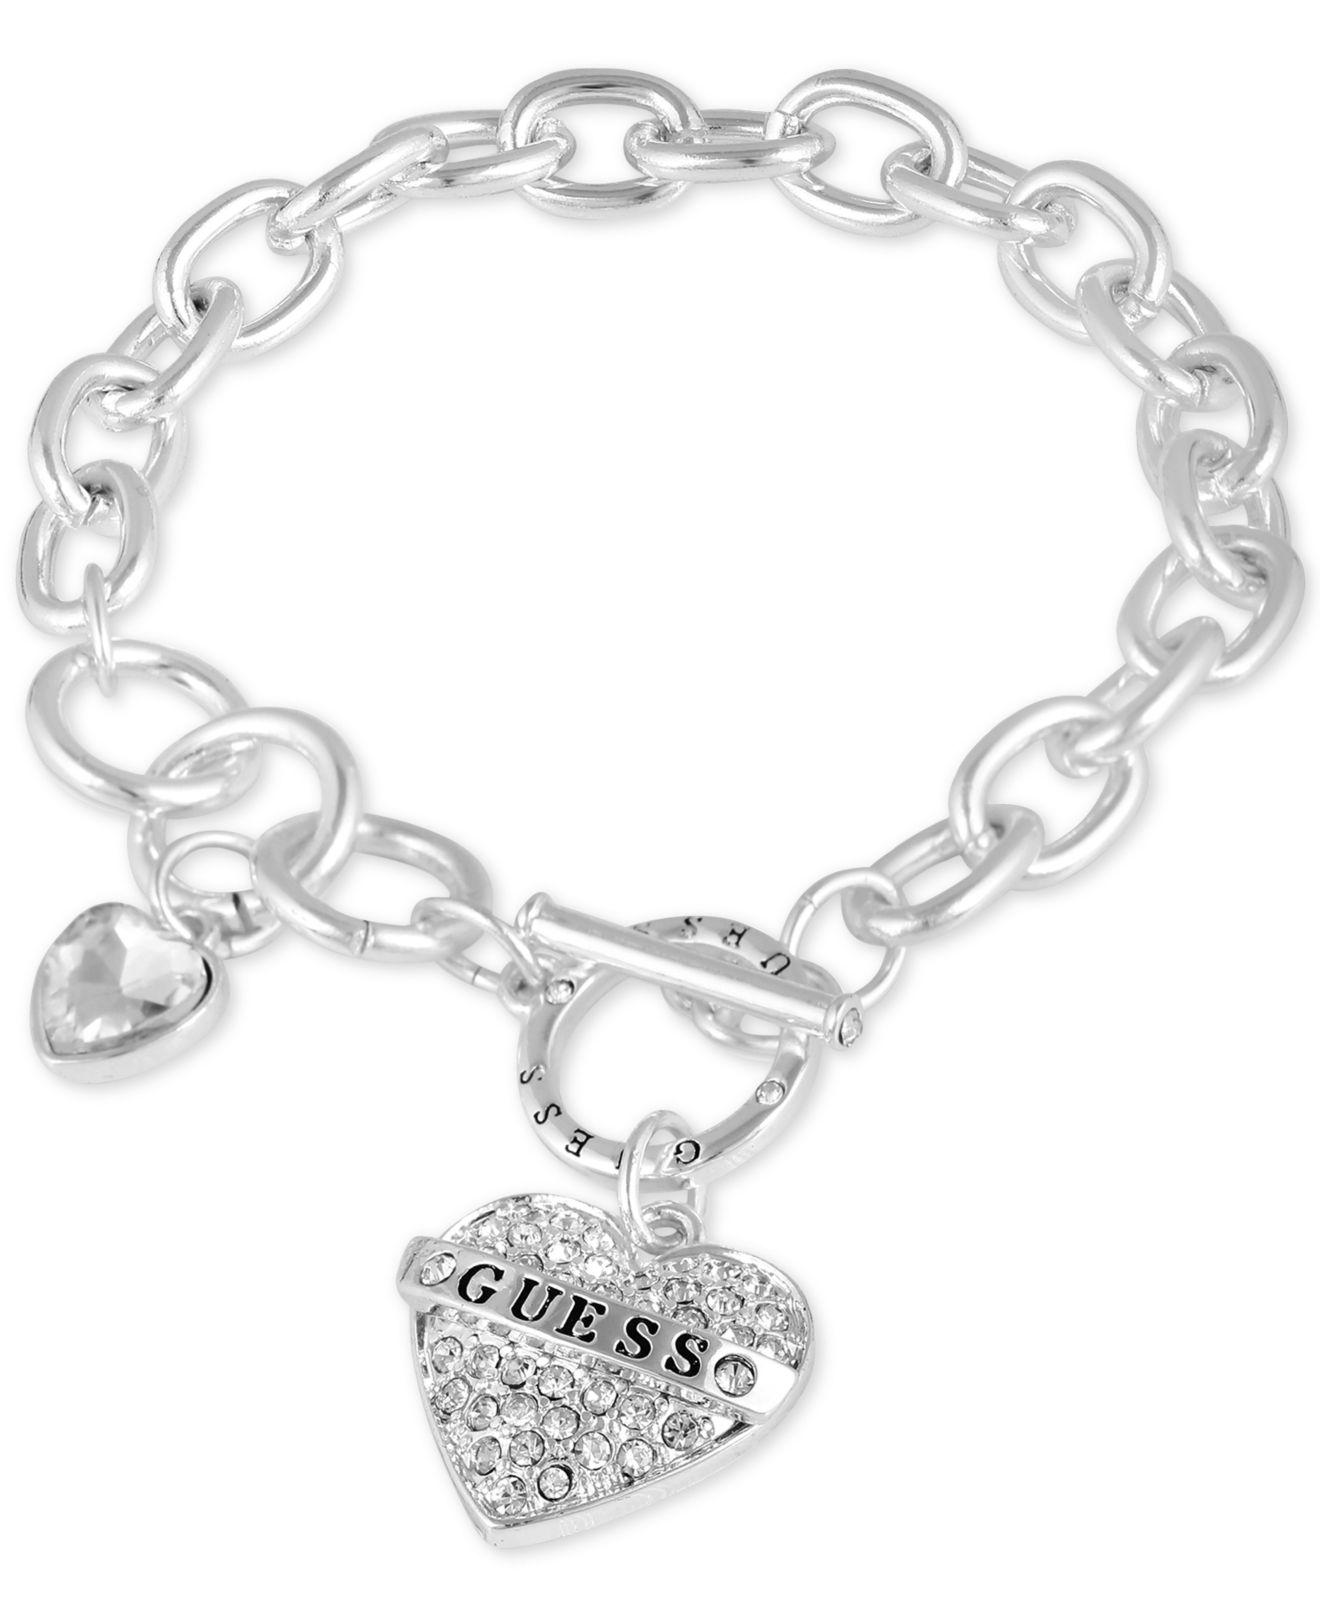 Lyst - Guess Silver-tone Crystal Logo Heart Charm Link Bracelet in Metallic